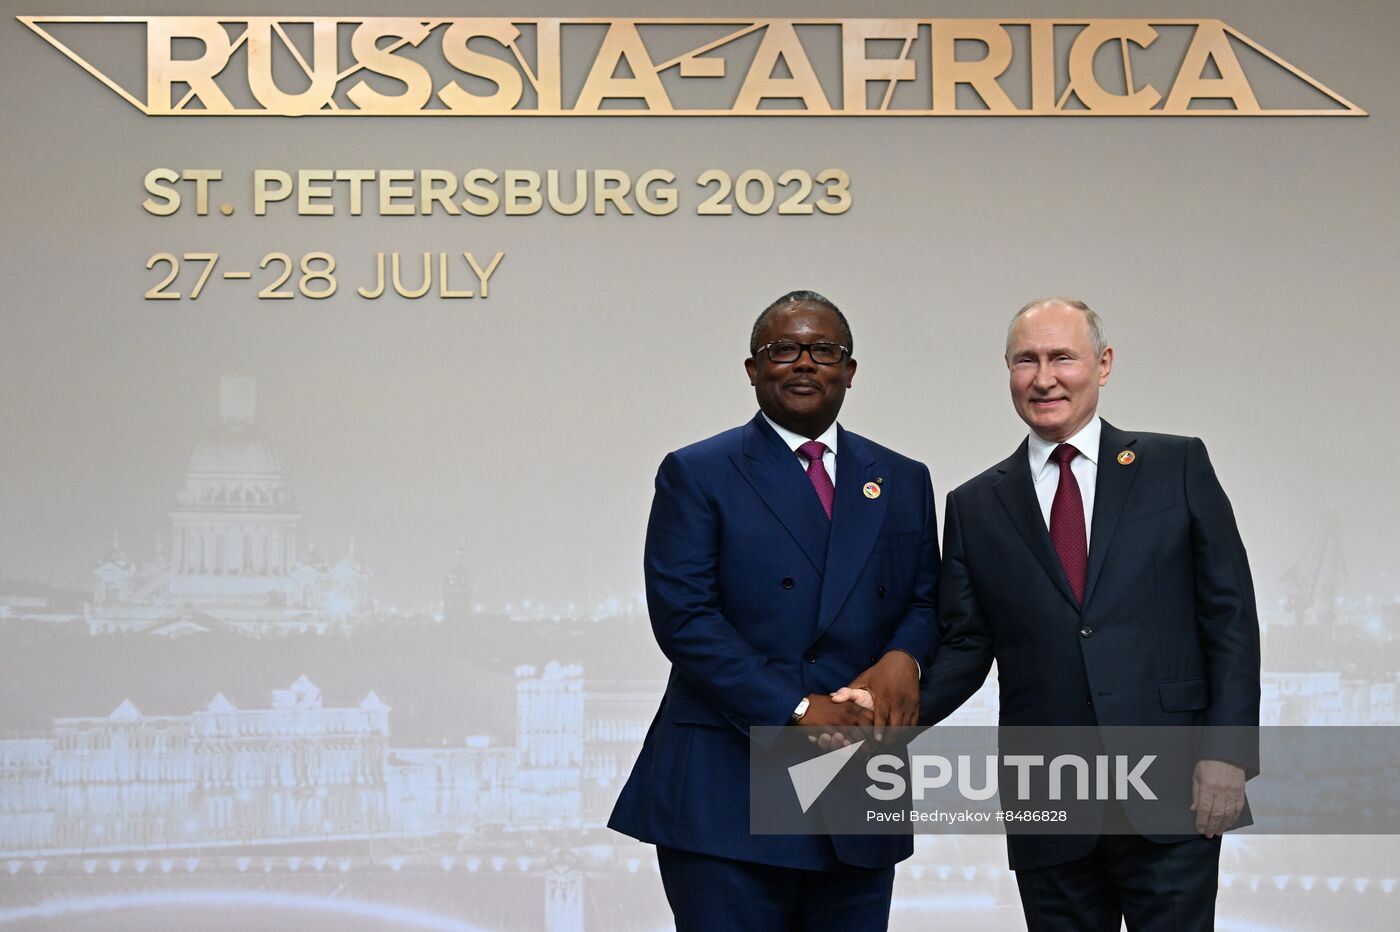 Russia Putin Africa Summit Welcome Ceremony